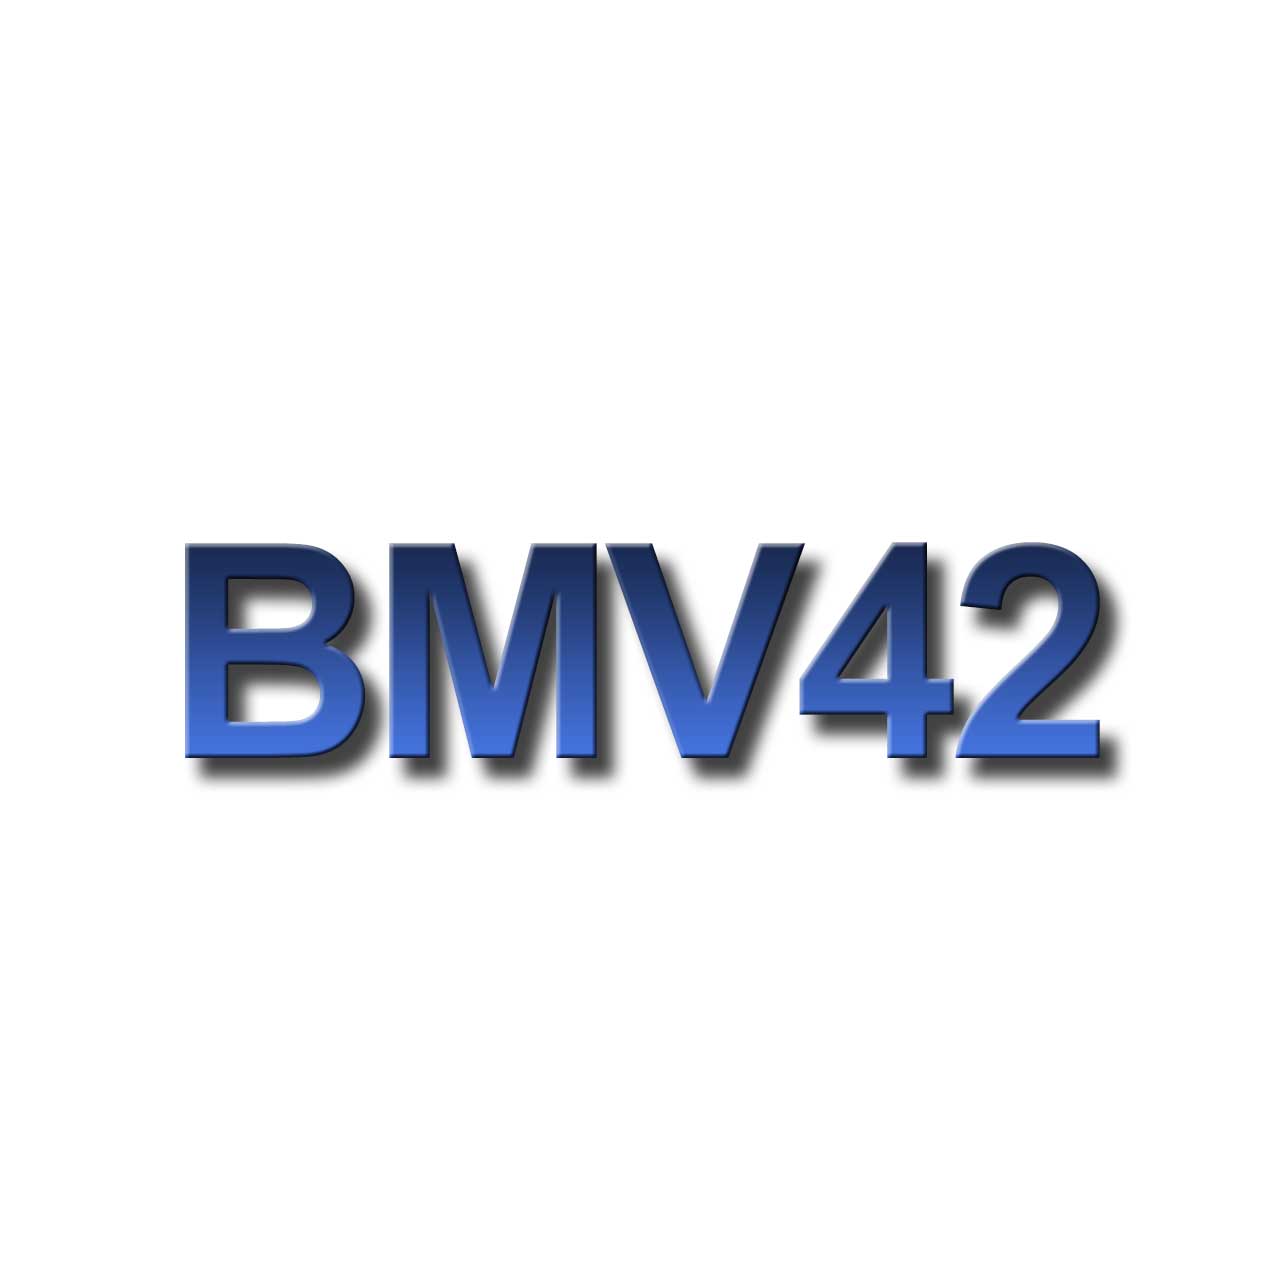 BMV(F)42